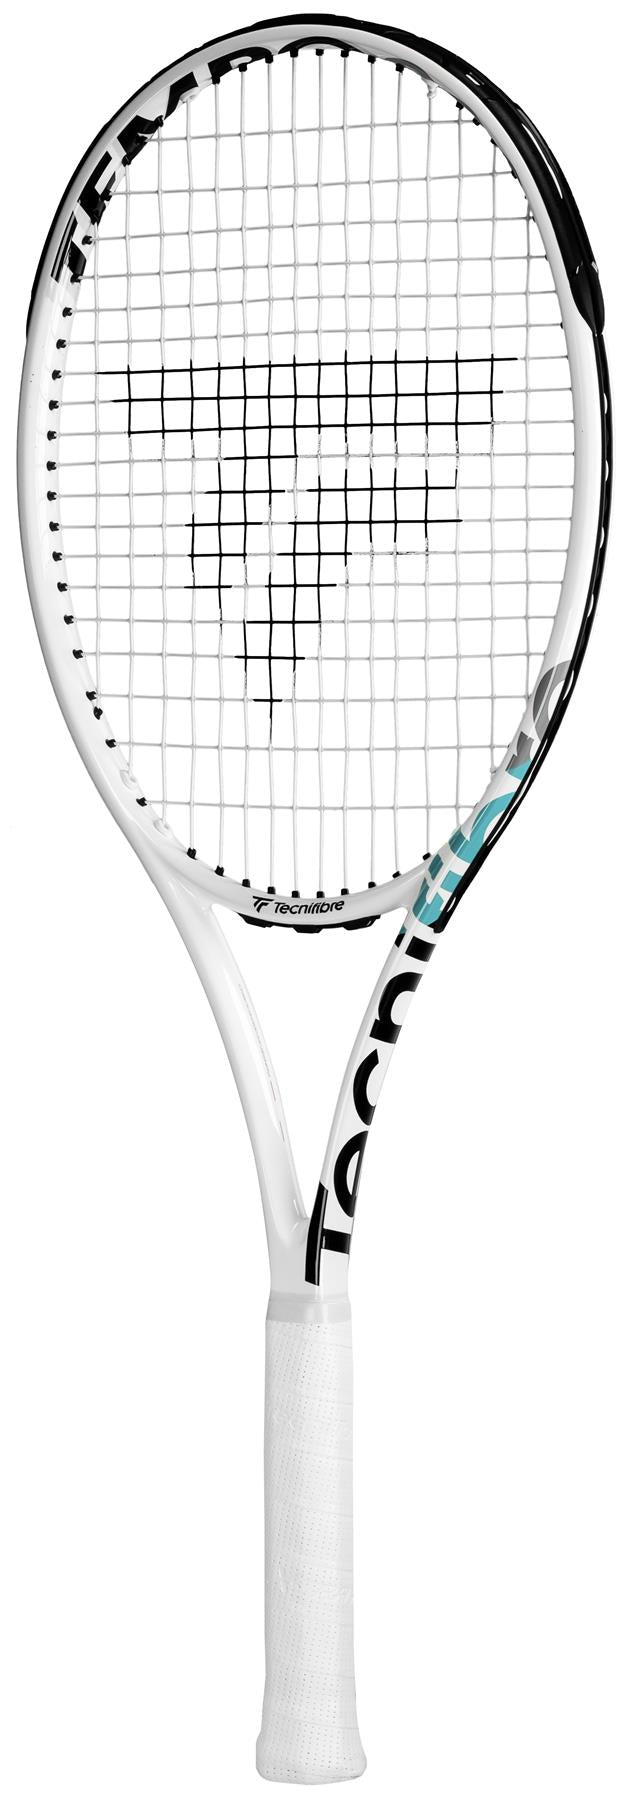 Tecnifibre Tempo 298 Tennis Racket - White (Frame Only)